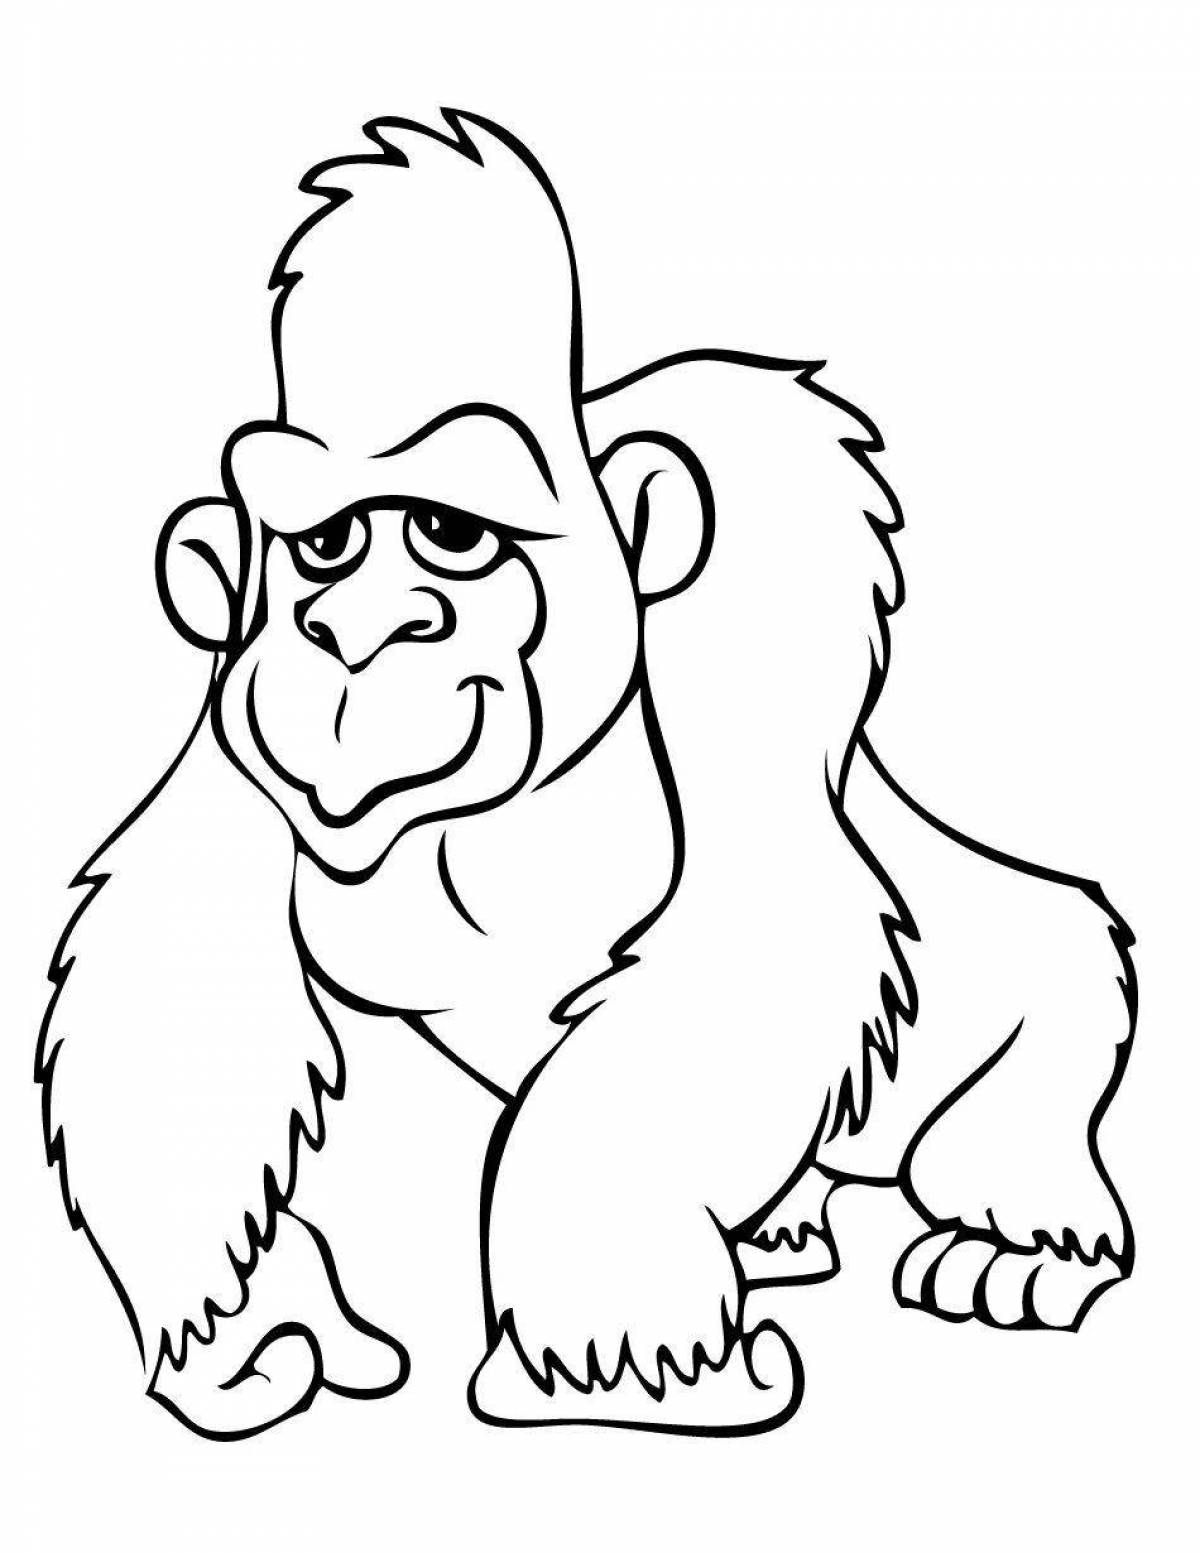 Coloring gorilla for kids